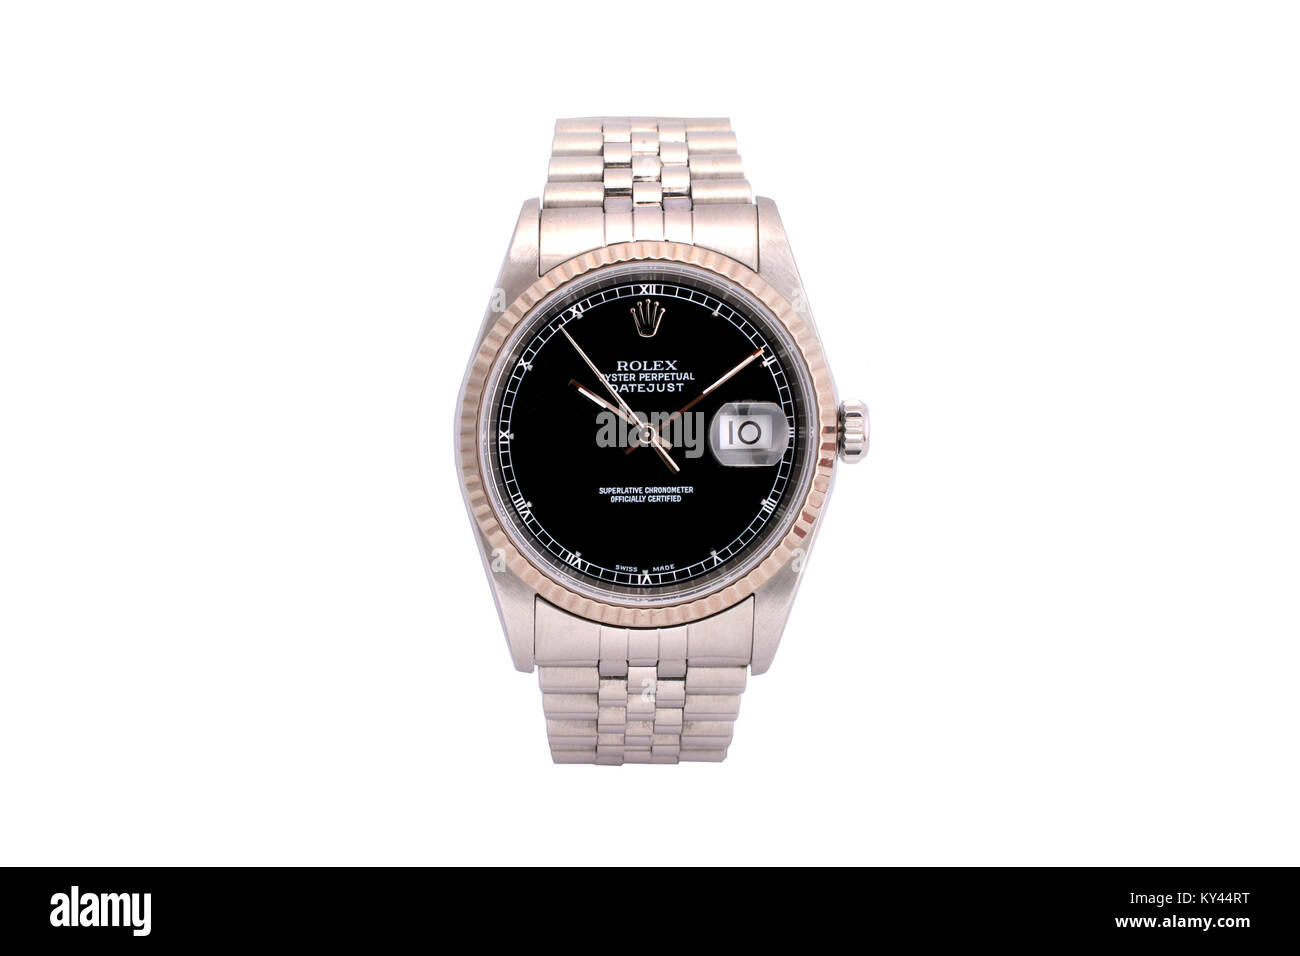 Rolex Oyster Perpetual date ajustar hombre de acero inoxidable reloj con cara negra Foto de stock